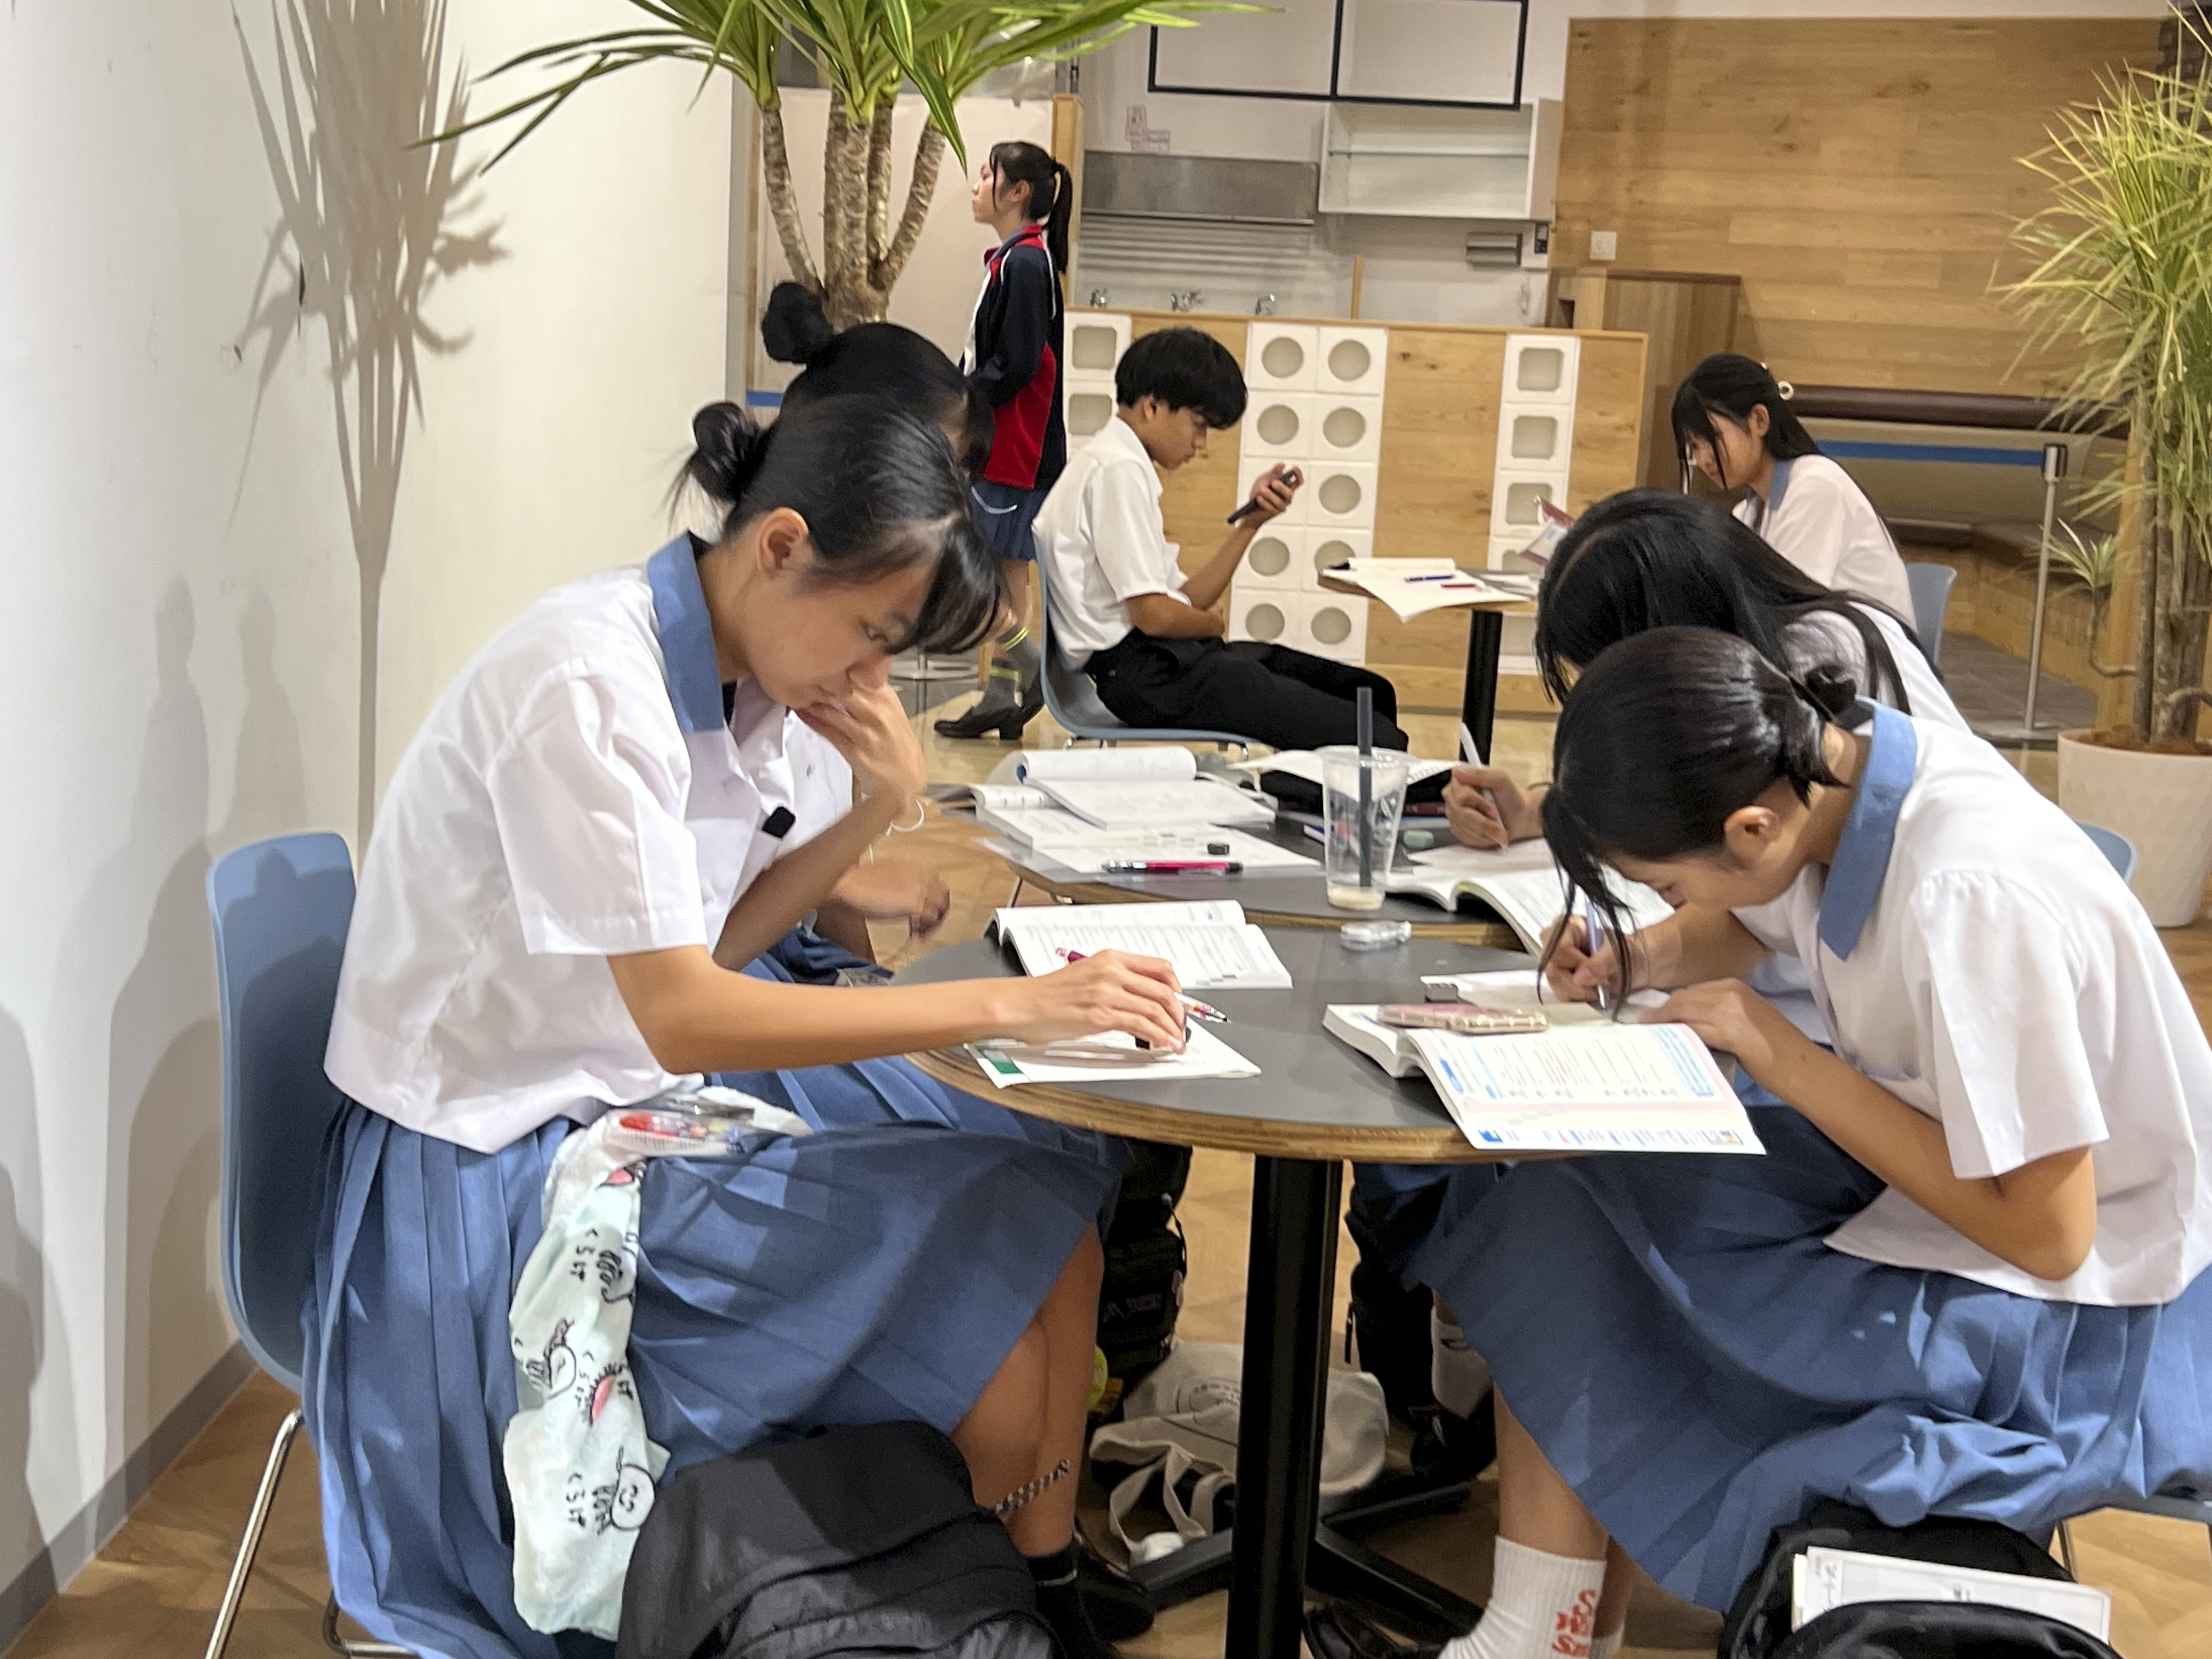 11 – Homework in the café, Japan